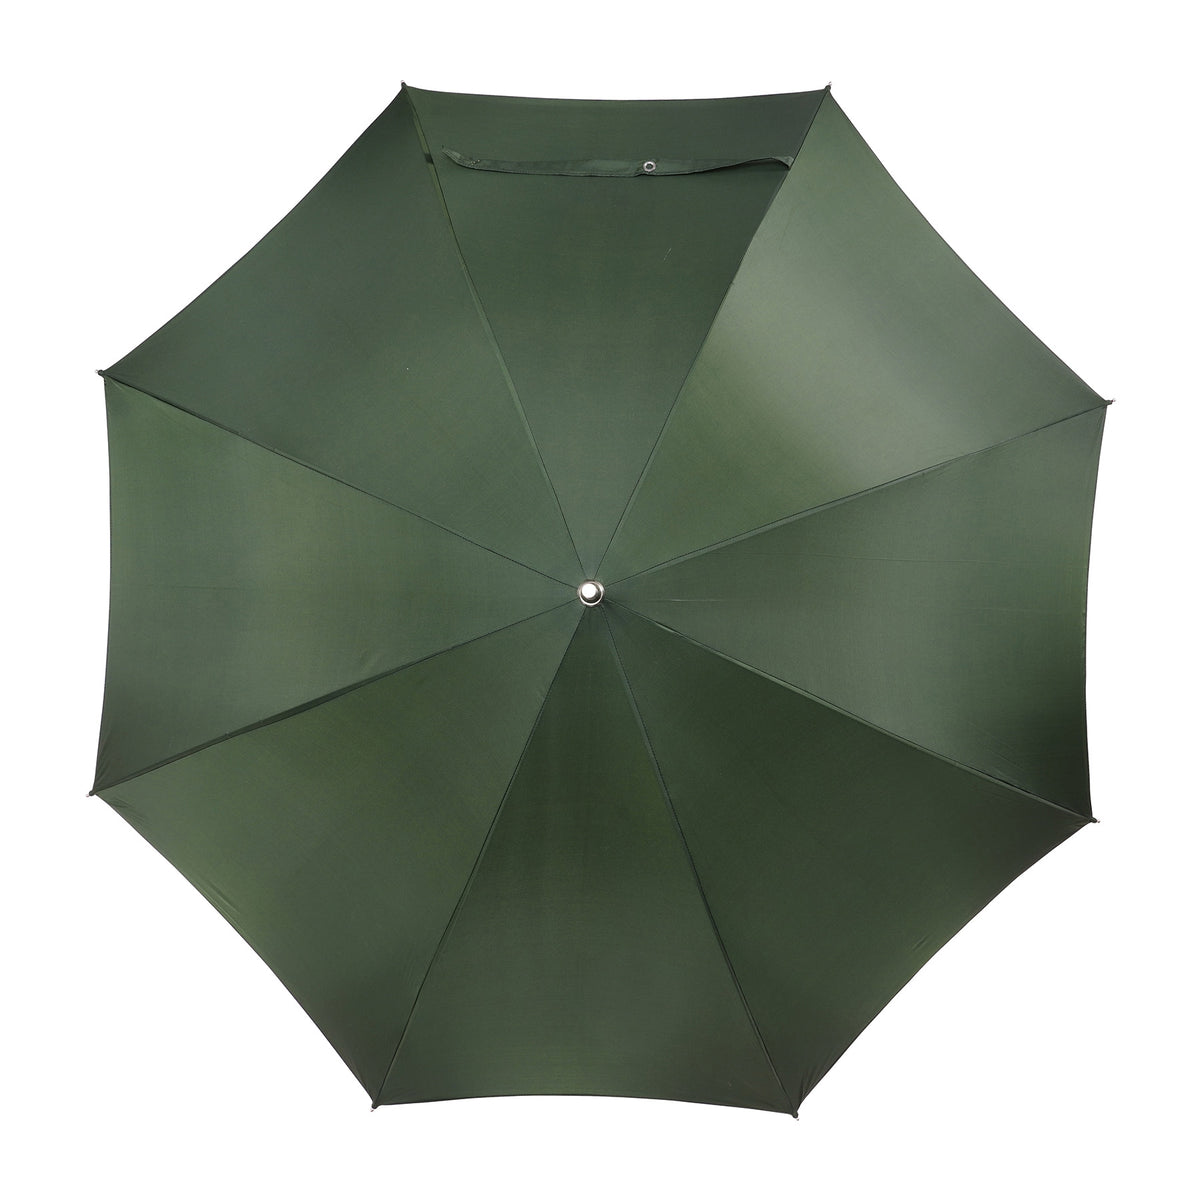 Illuminated Manuscript Umbrella - Green